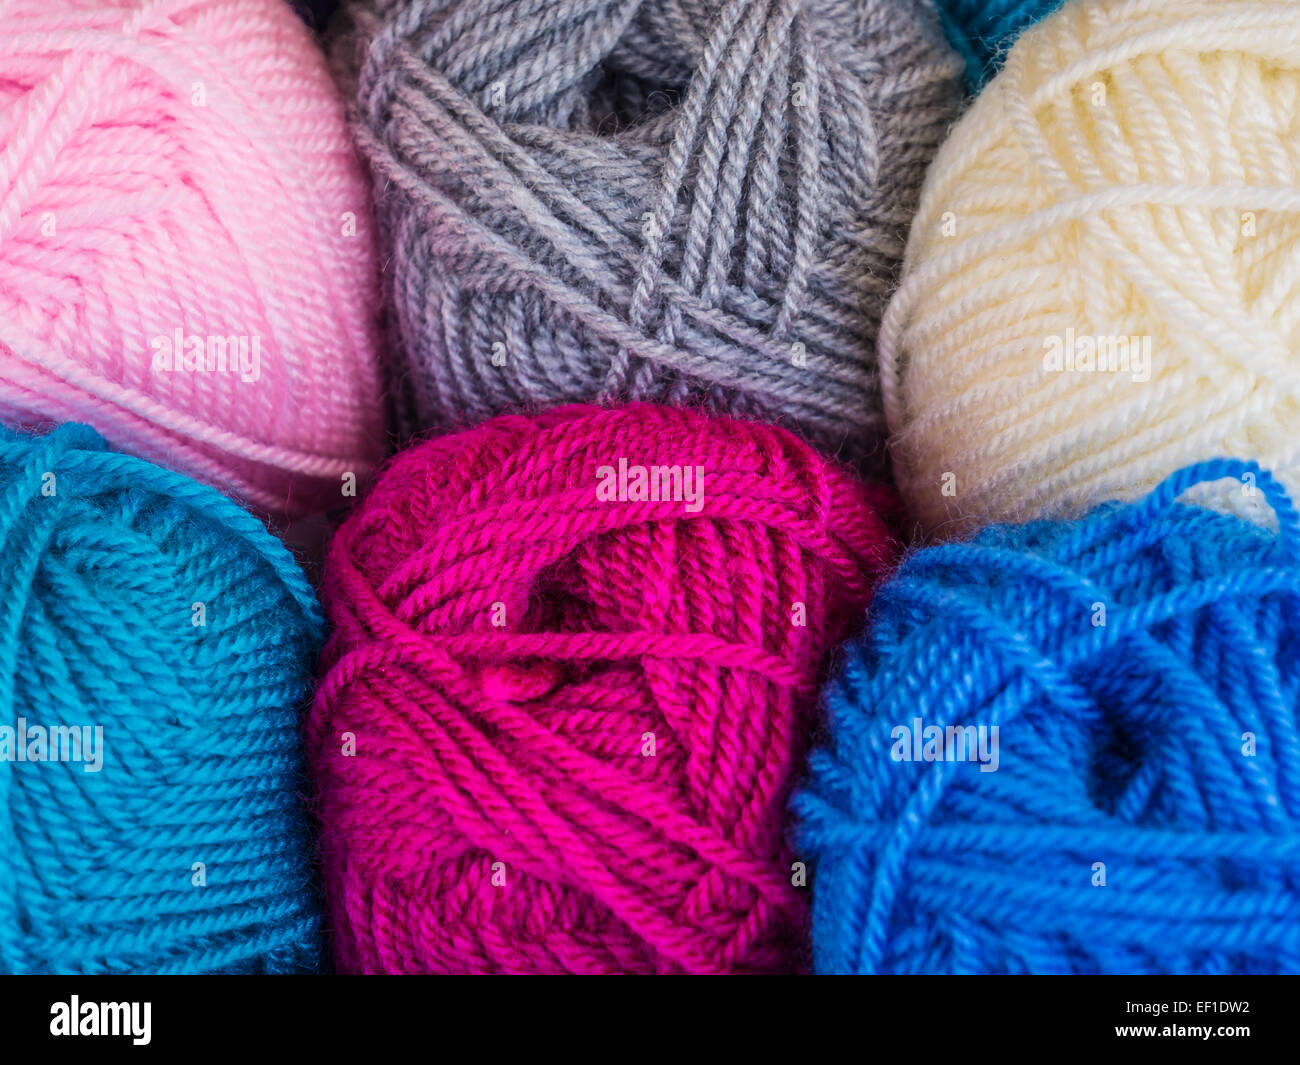 Colorful knitting wool balls. Stock Photo